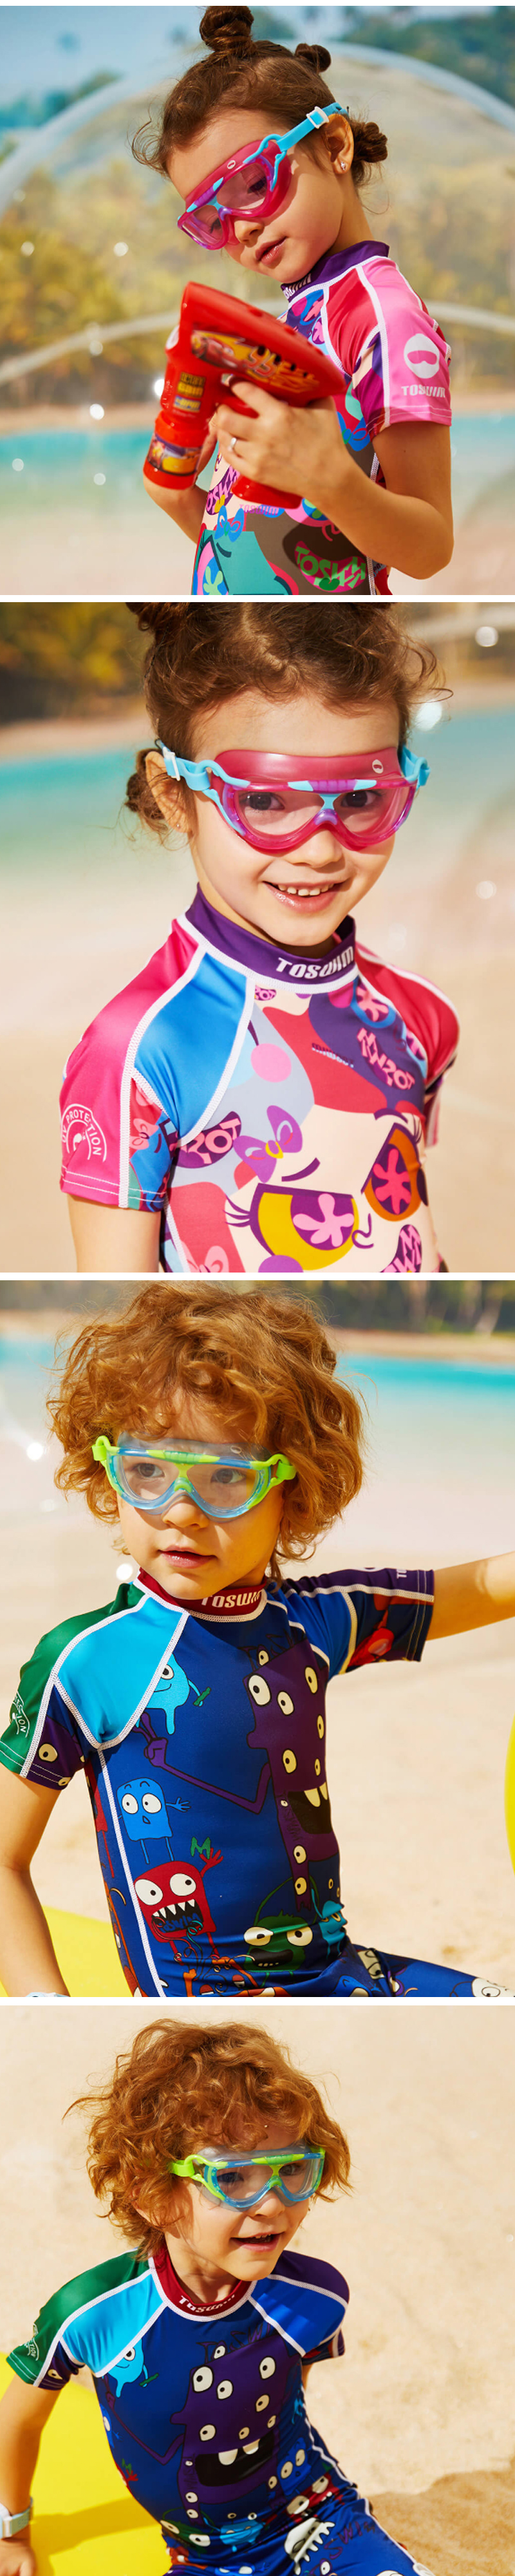 TOSWIM-Children-Swimming-Goggles-Anti-Fog-Rapid-Drainage-Breathable-Comfort-HD-Glasses-Water-Sports-1521149-2